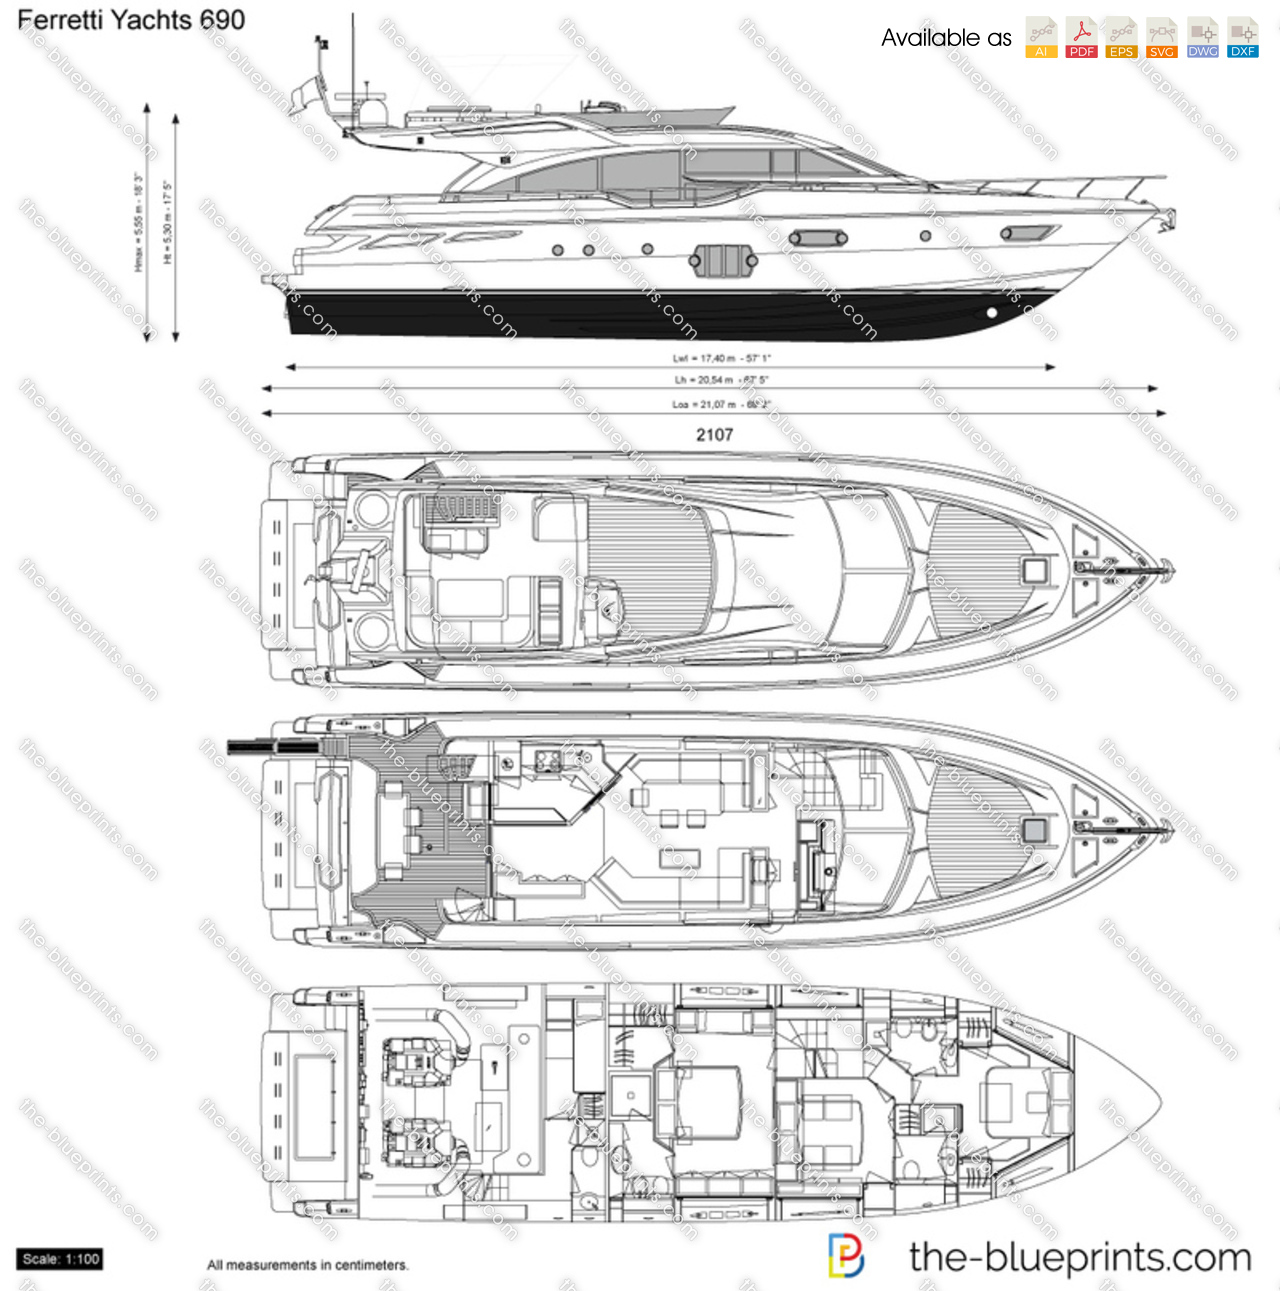 Ferretti Yachts 690 vector drawing1280 x 1291